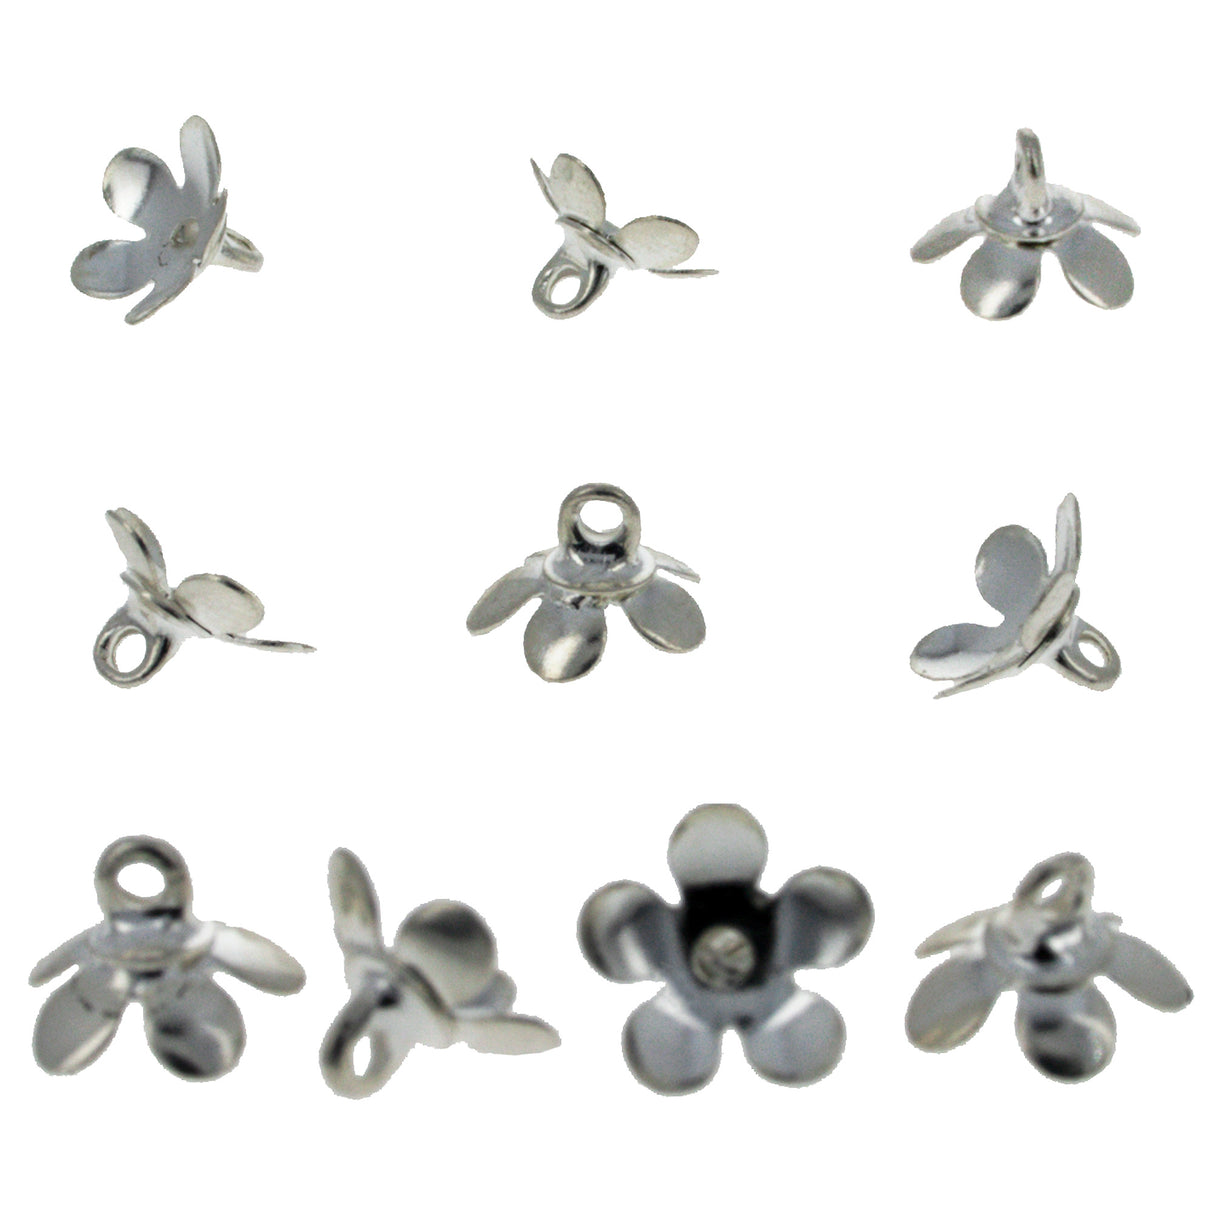 10 Medium Silver Tone Metal Ornament Caps - Egg Top Findings, End Caps in Silver color,  shape